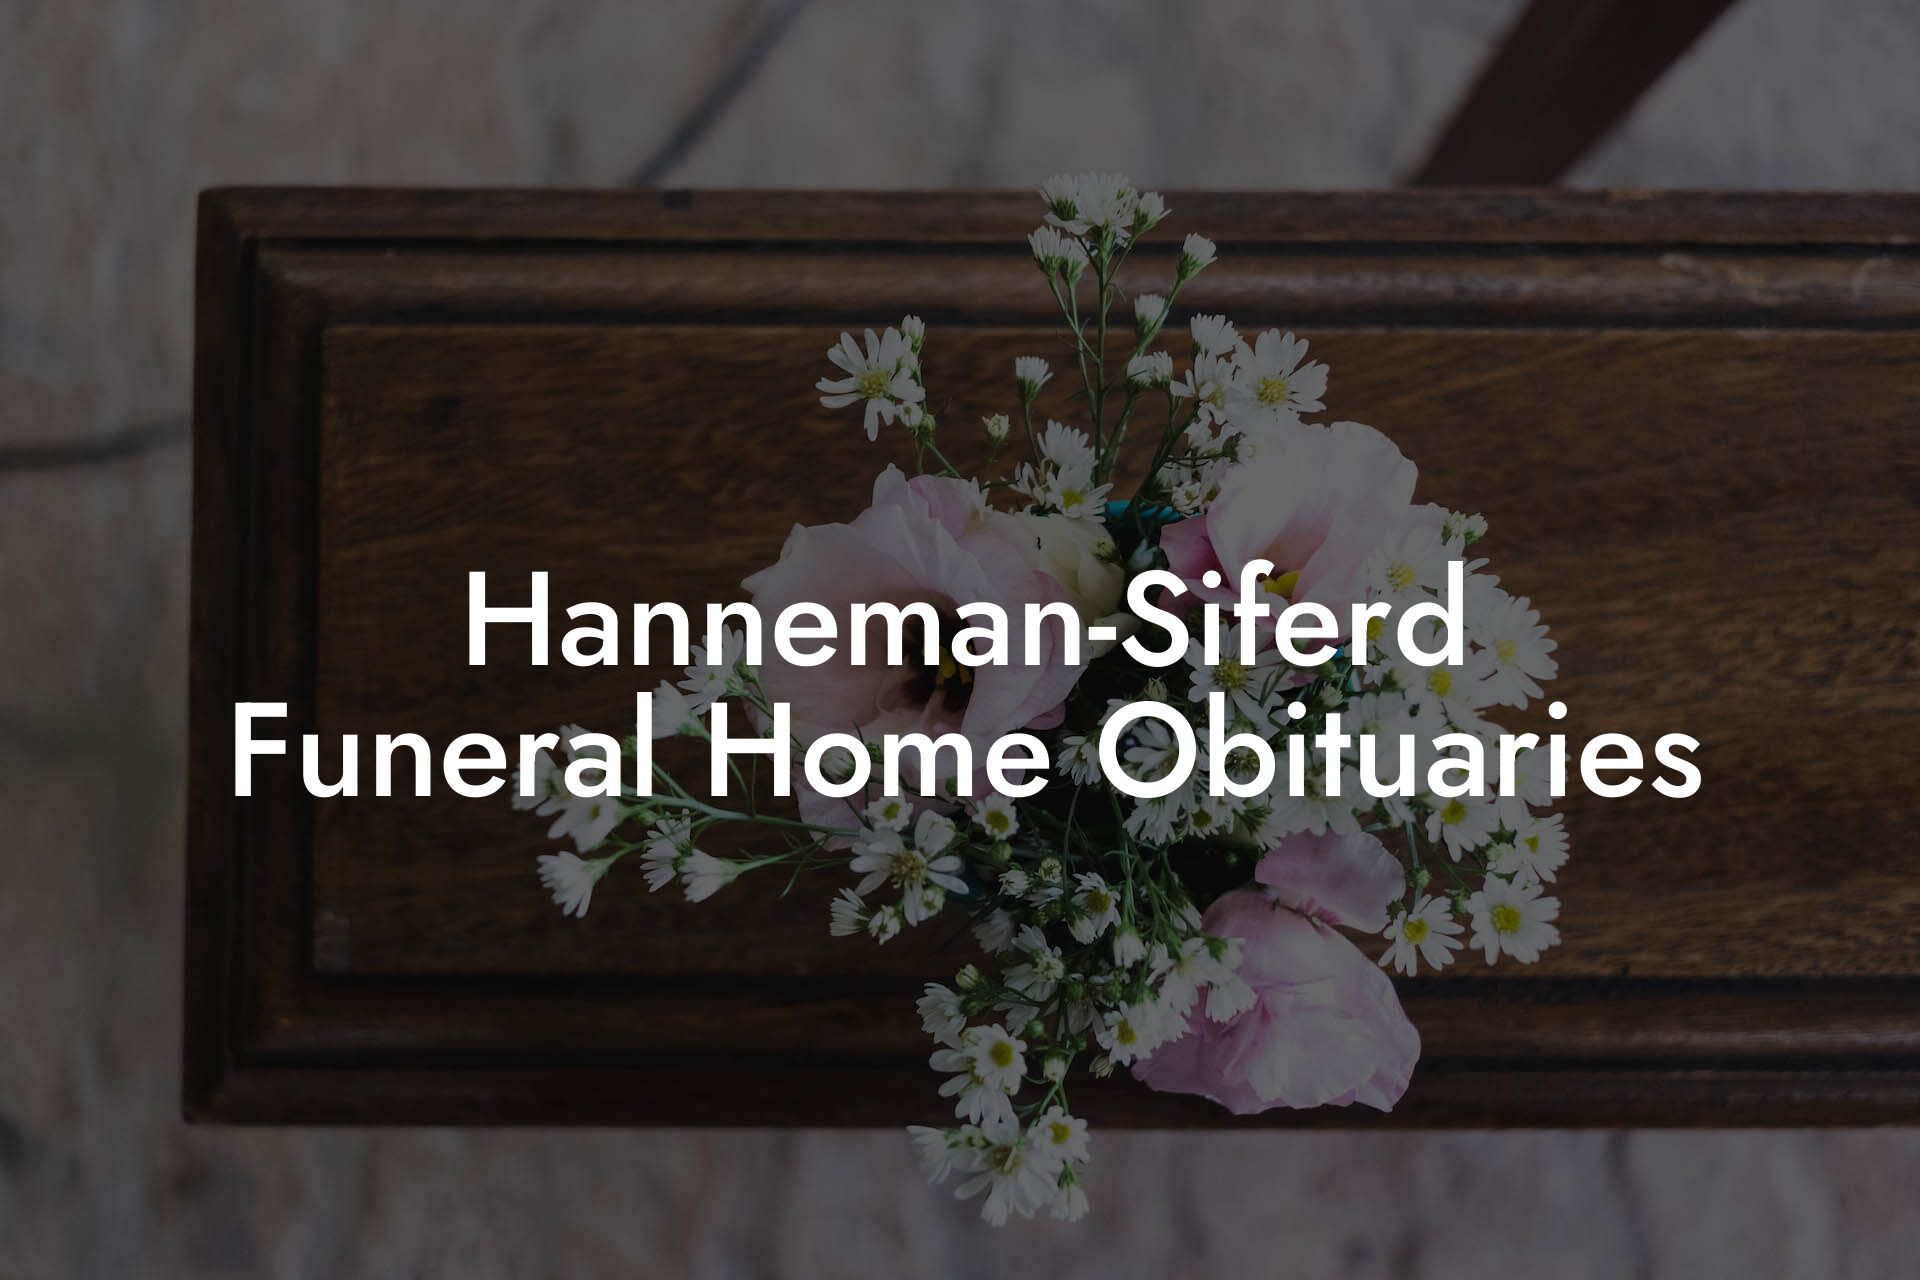 Hanneman-Siferd Funeral Home Obituaries